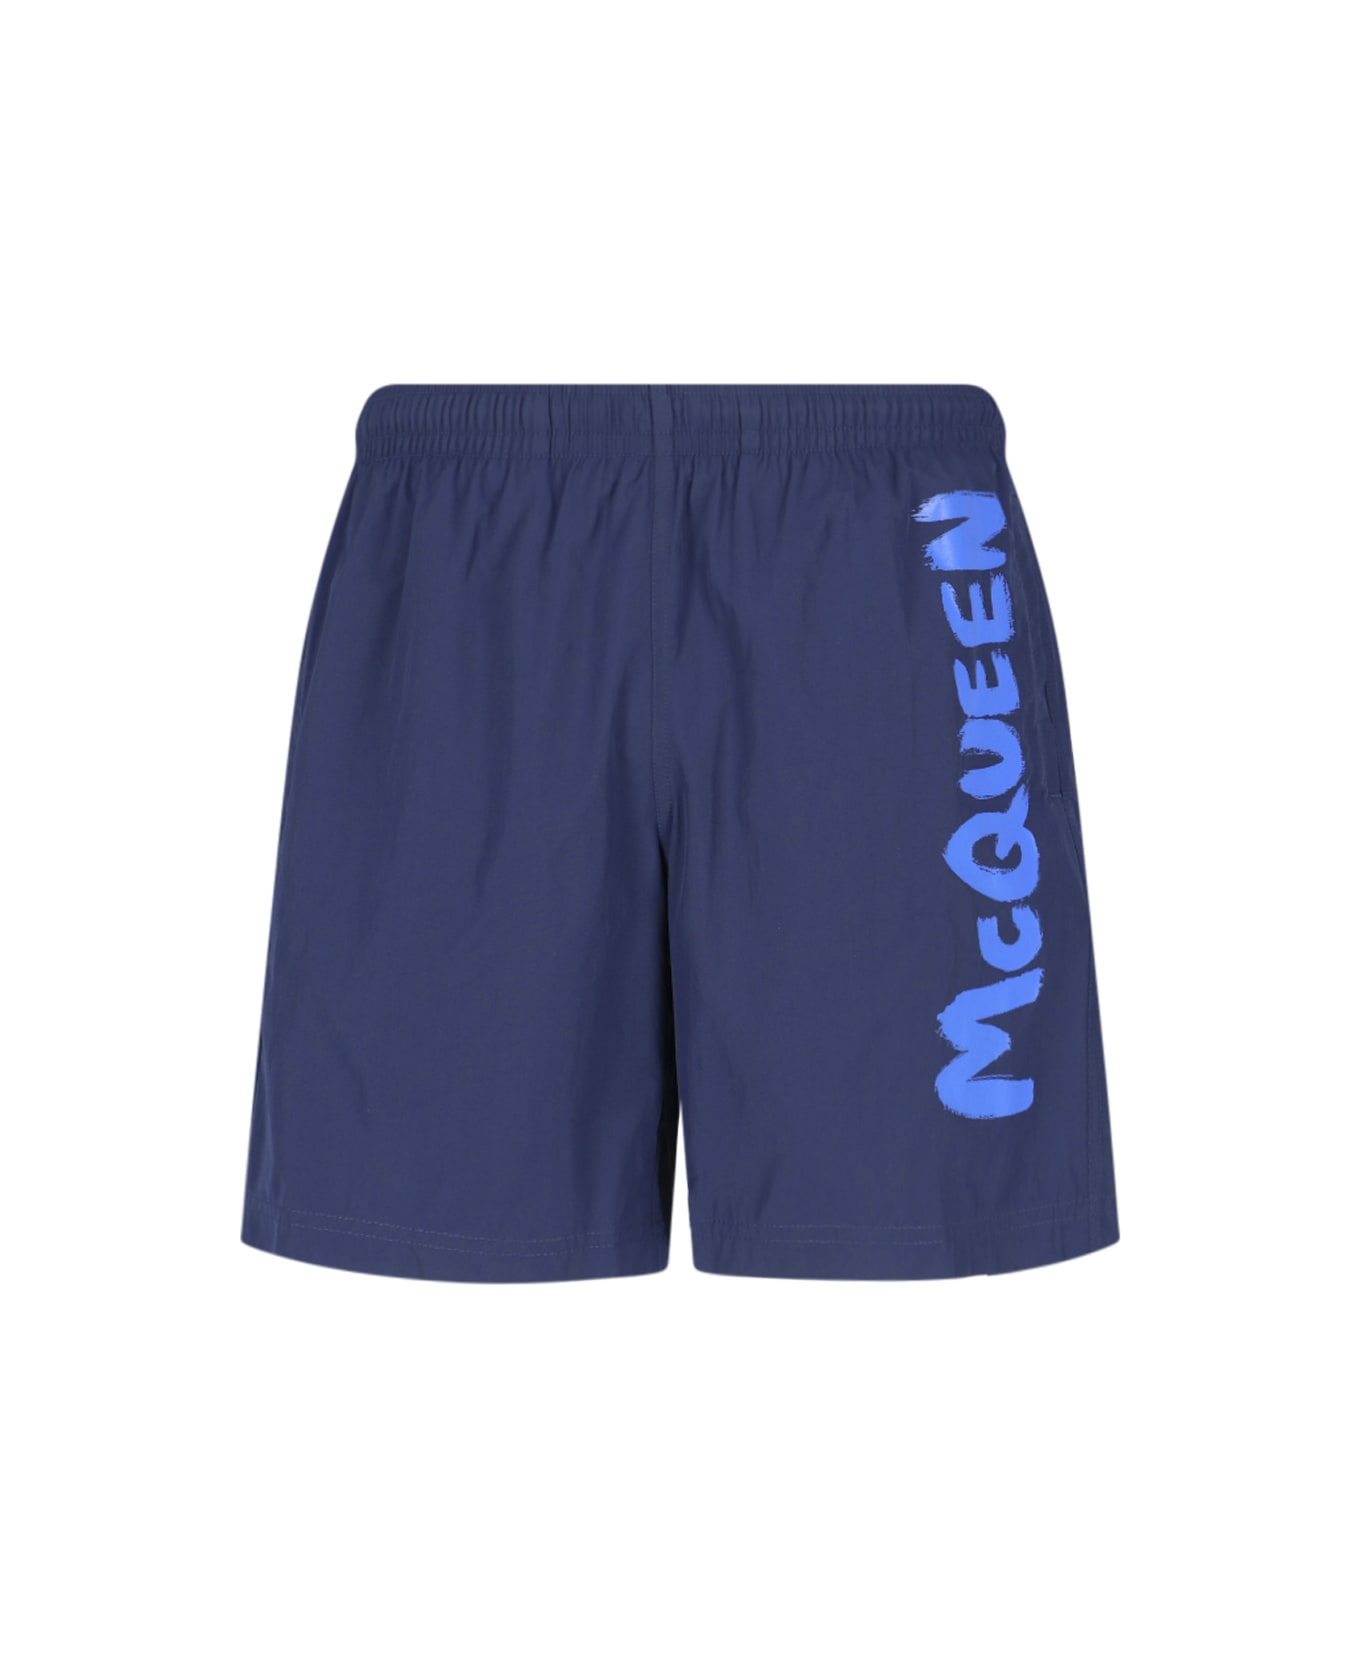 Alexander McQueen Graffiti Logo Swim Shorts - Blue ショートパンツ